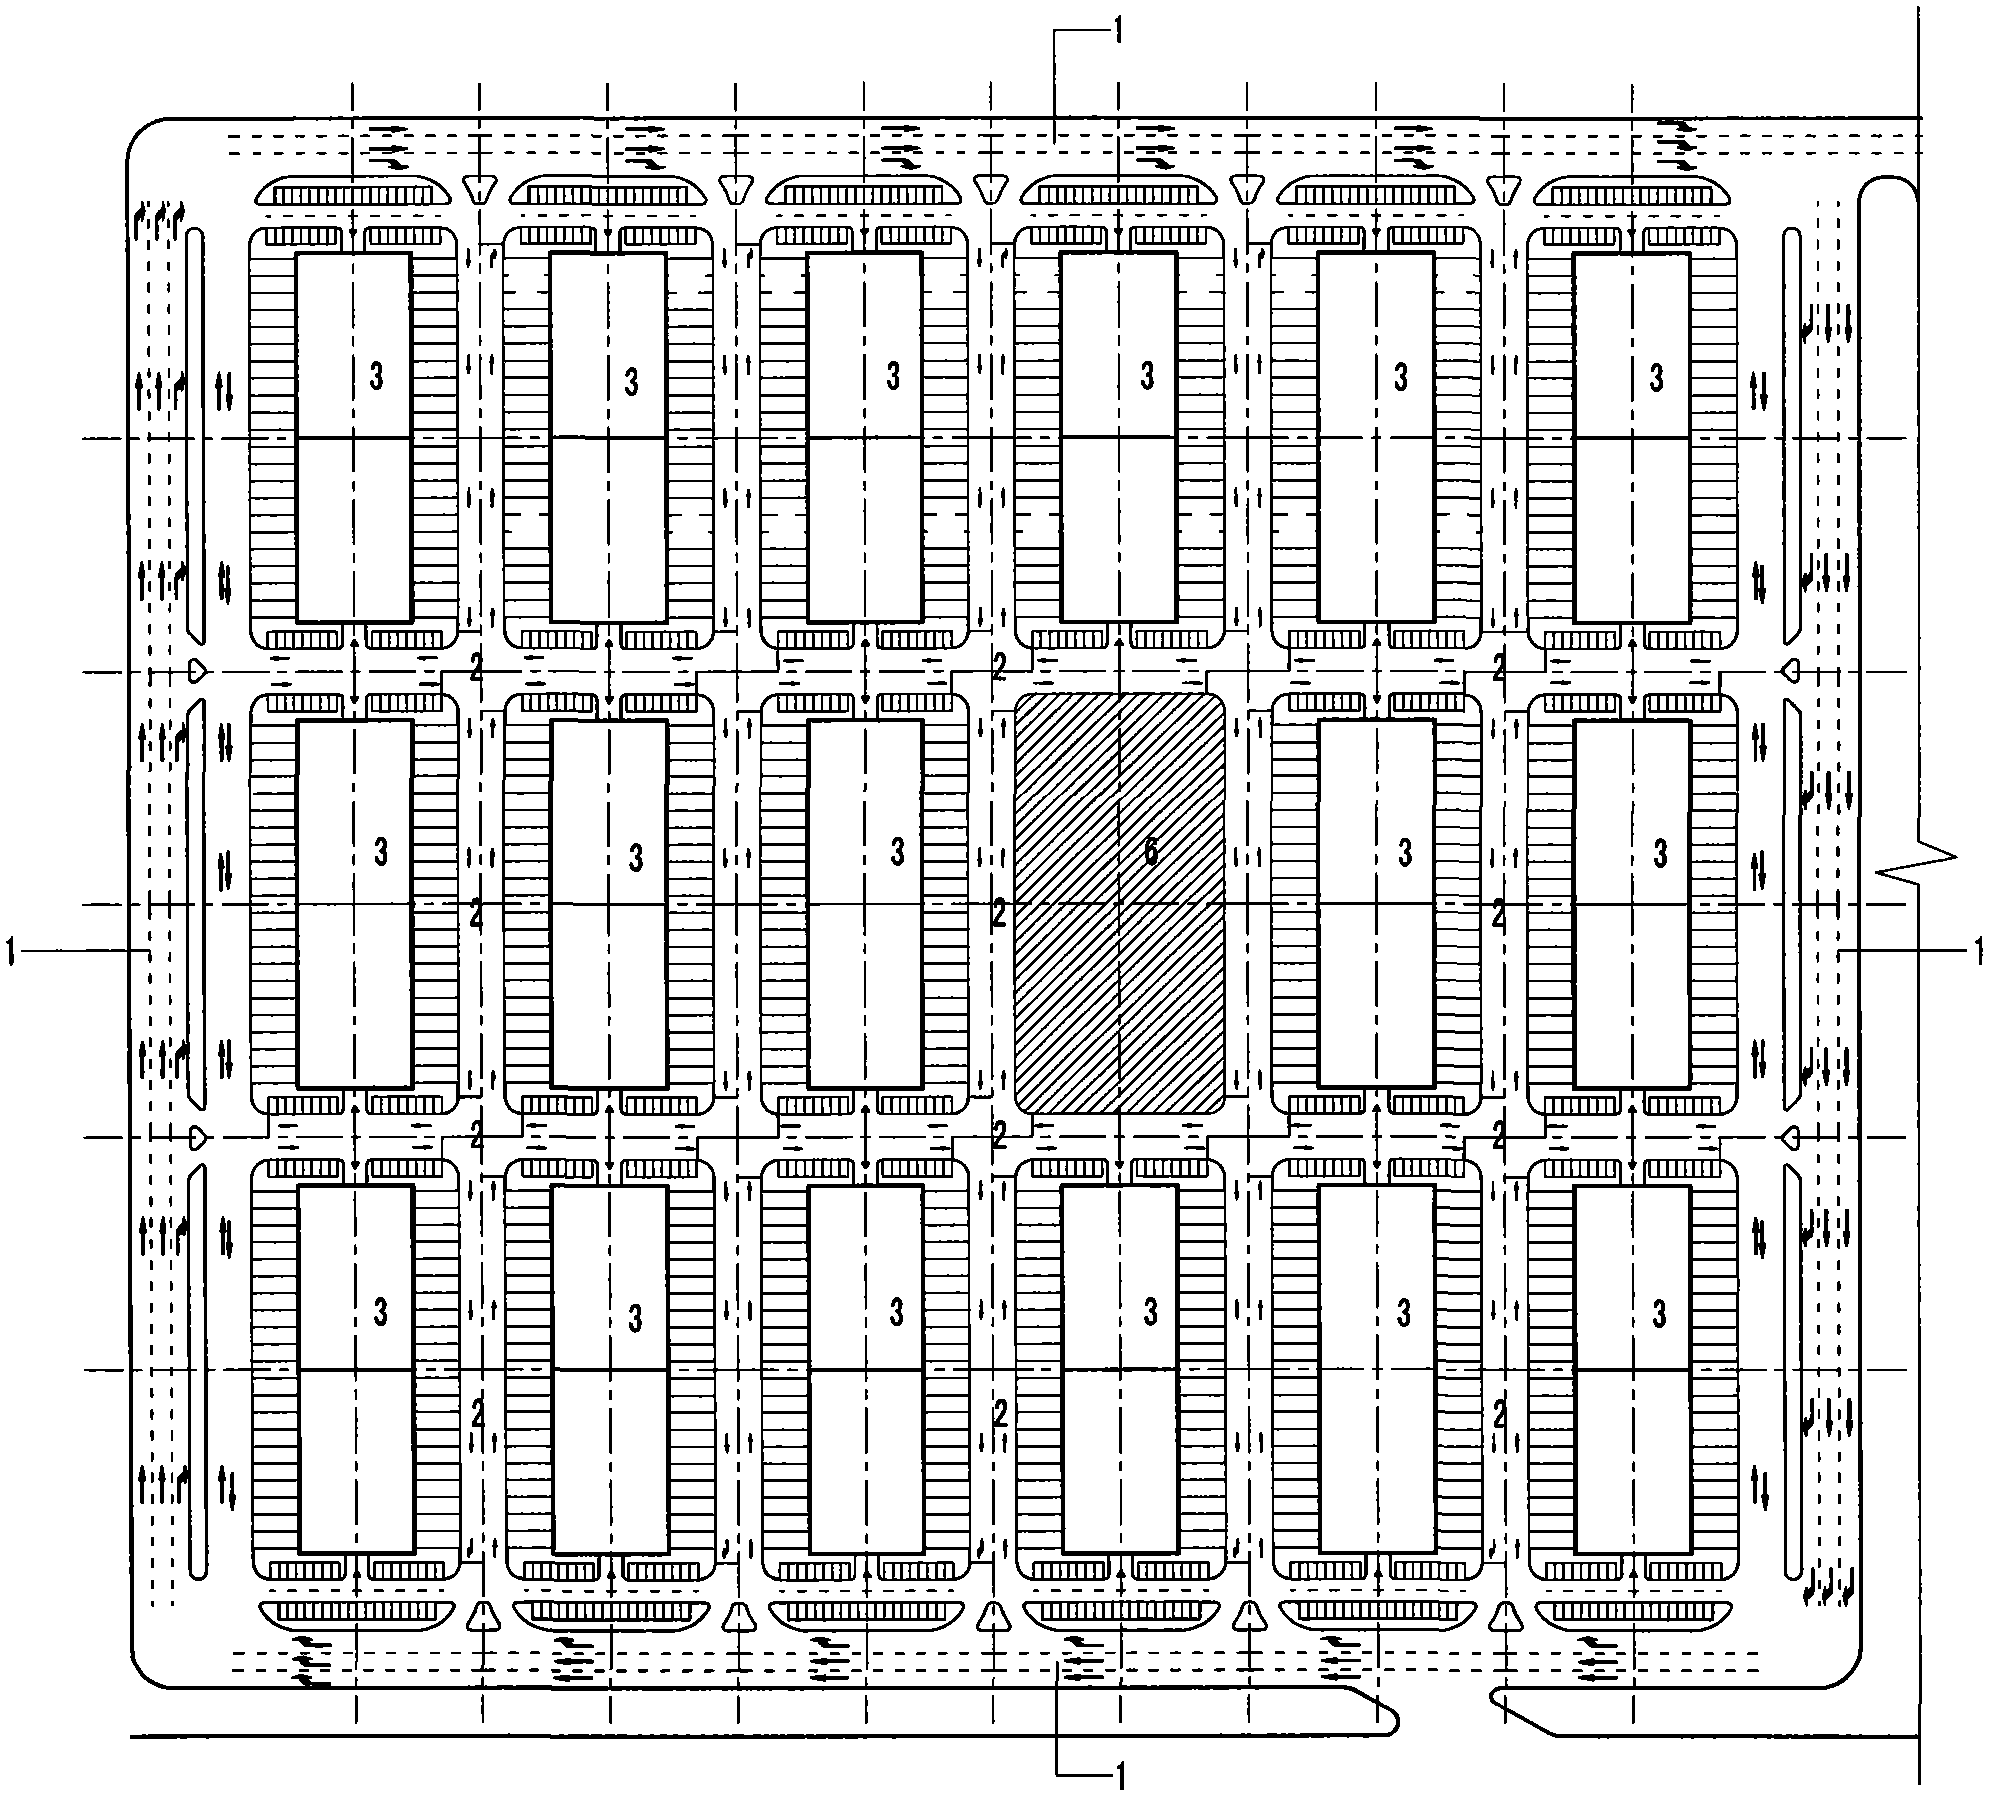 Closed type traffic layout of logistics park